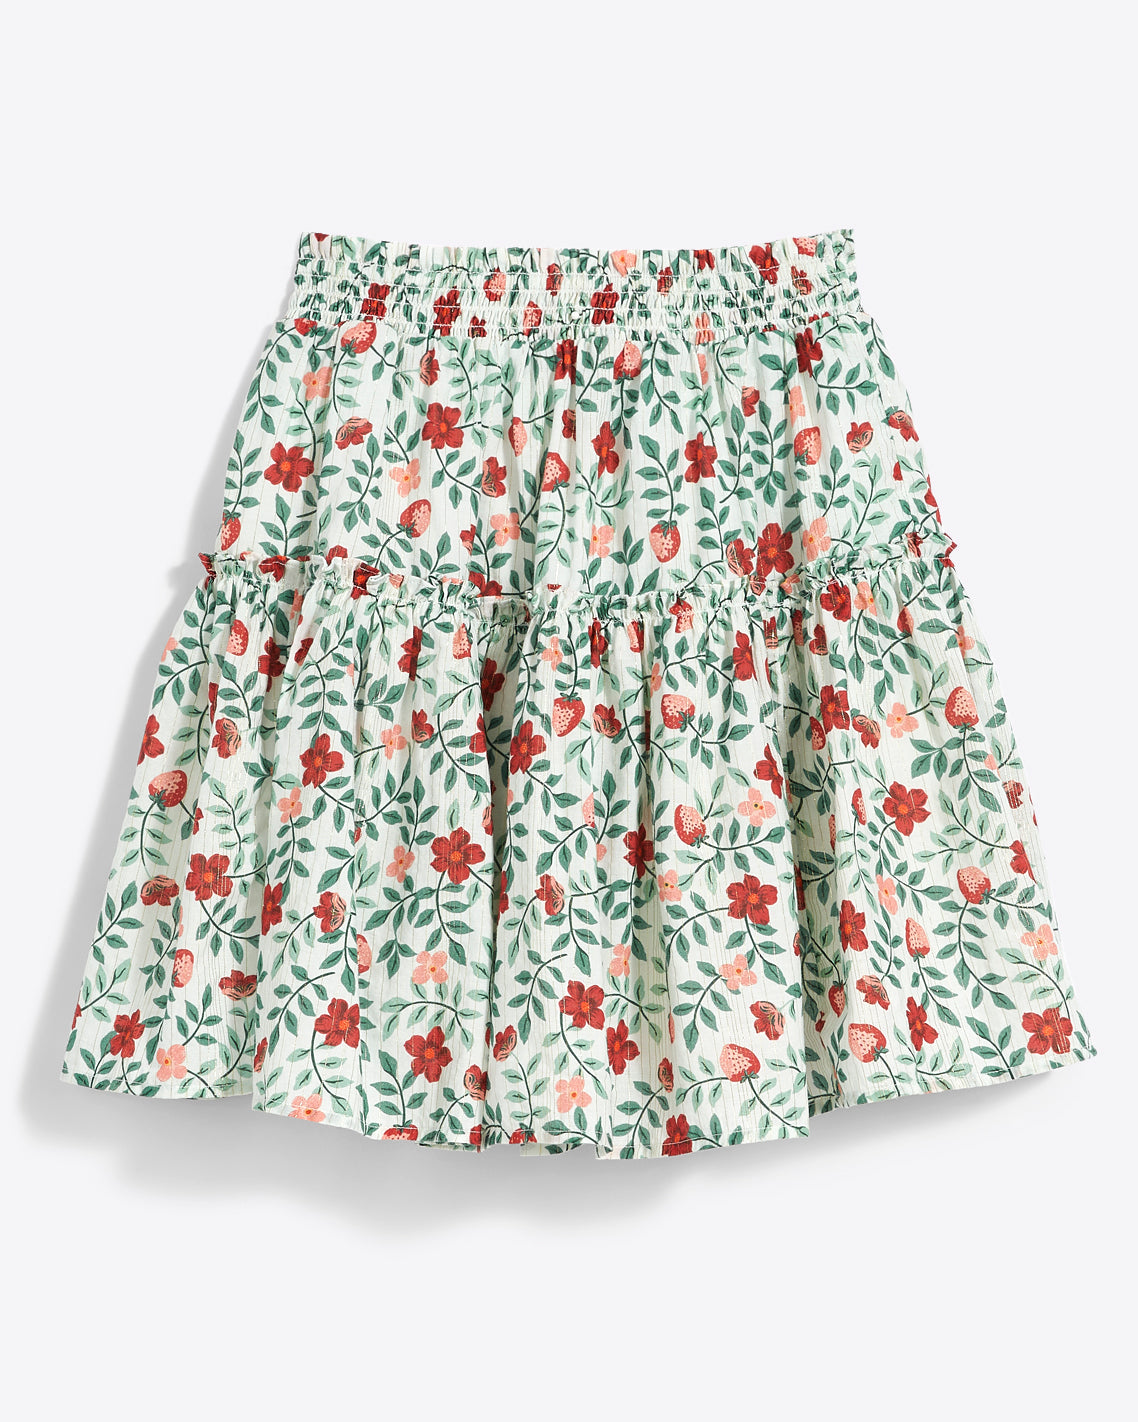 Pull on Mini Skirt in Strawberry Field